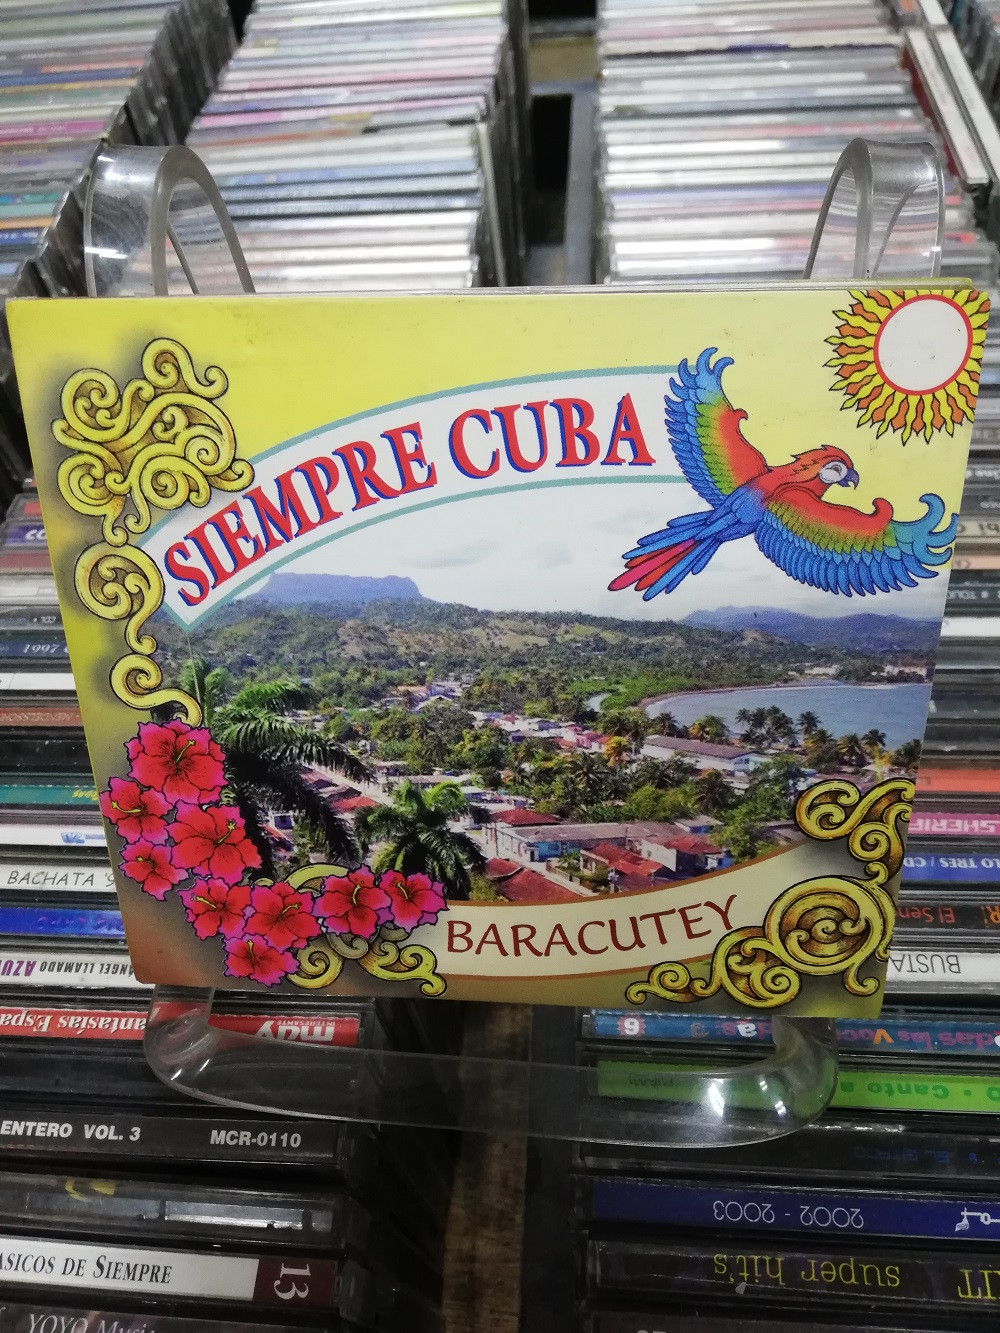 Imagen CD BARACUTEY - SIEMPRE CUBA 1